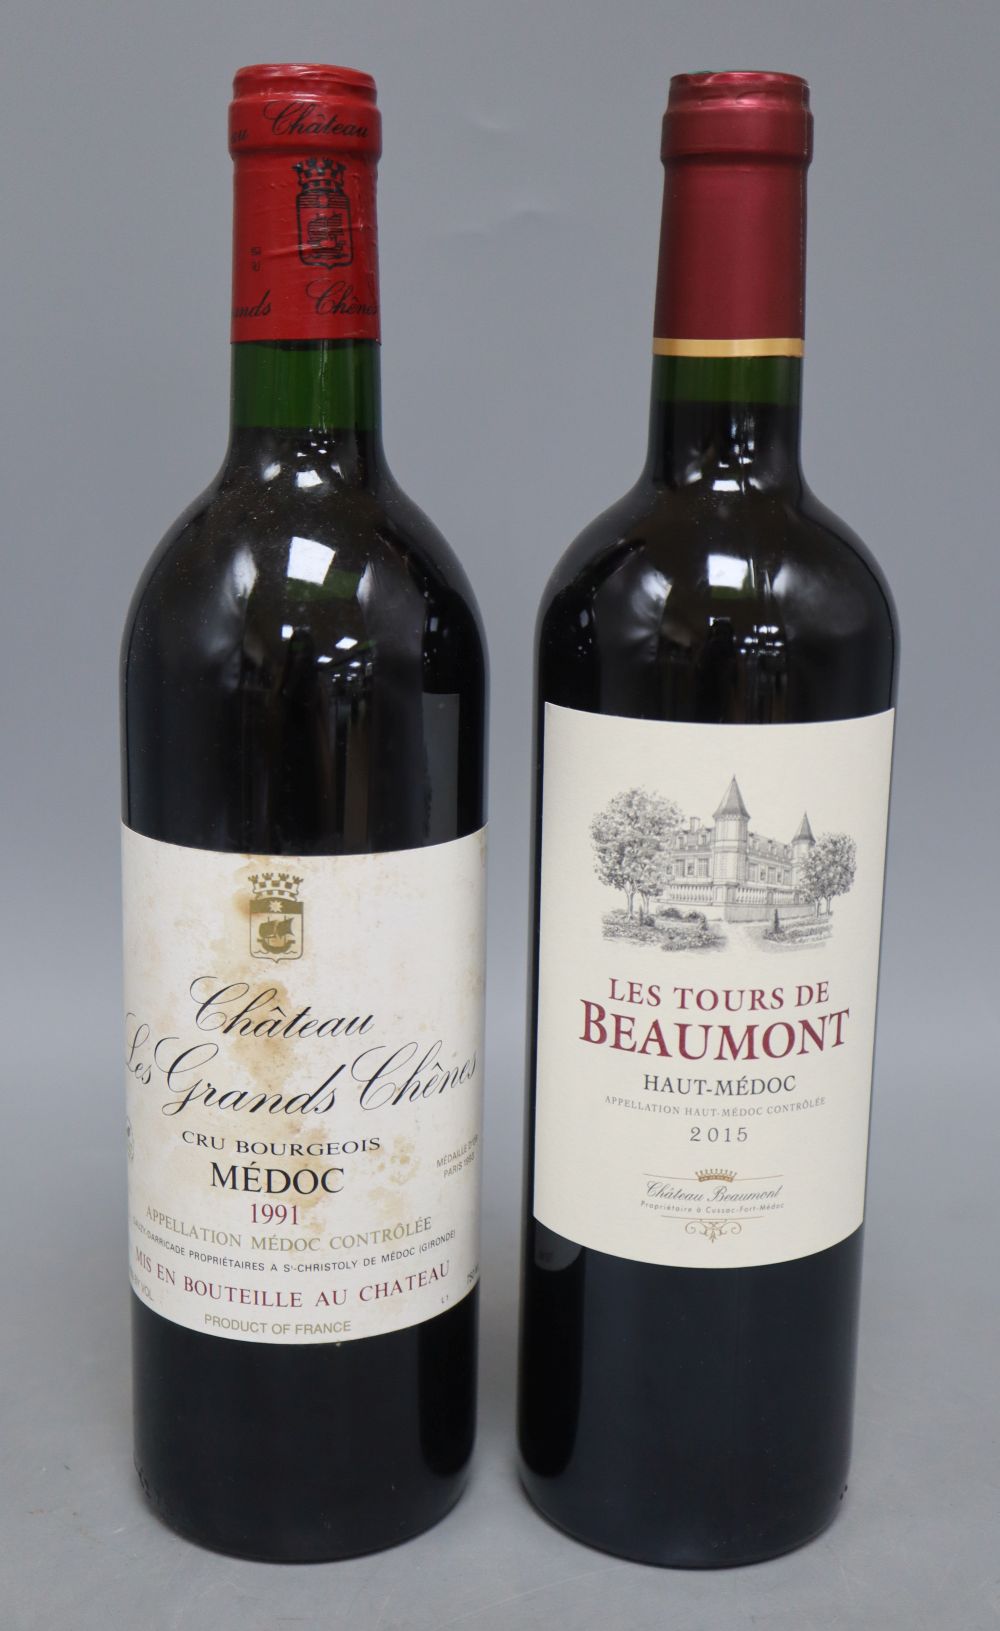 Two bottles of 1991 Medoc and five bottles of Haute Medoc 2015